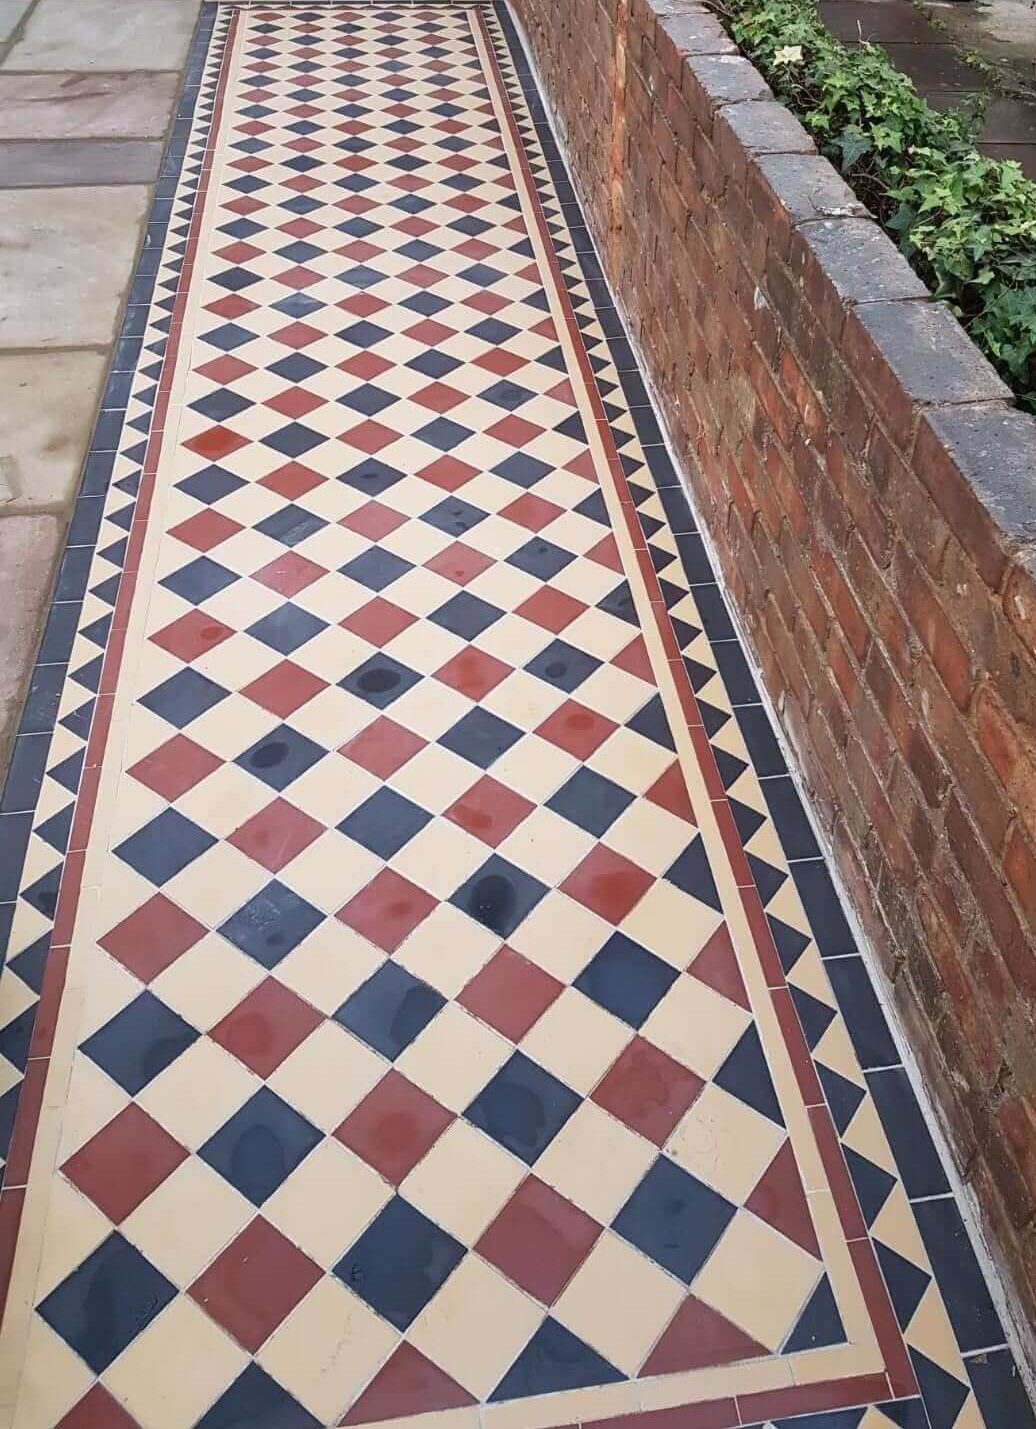  Edwardian Path Tile Installation Company Orpington BR6 / BR5